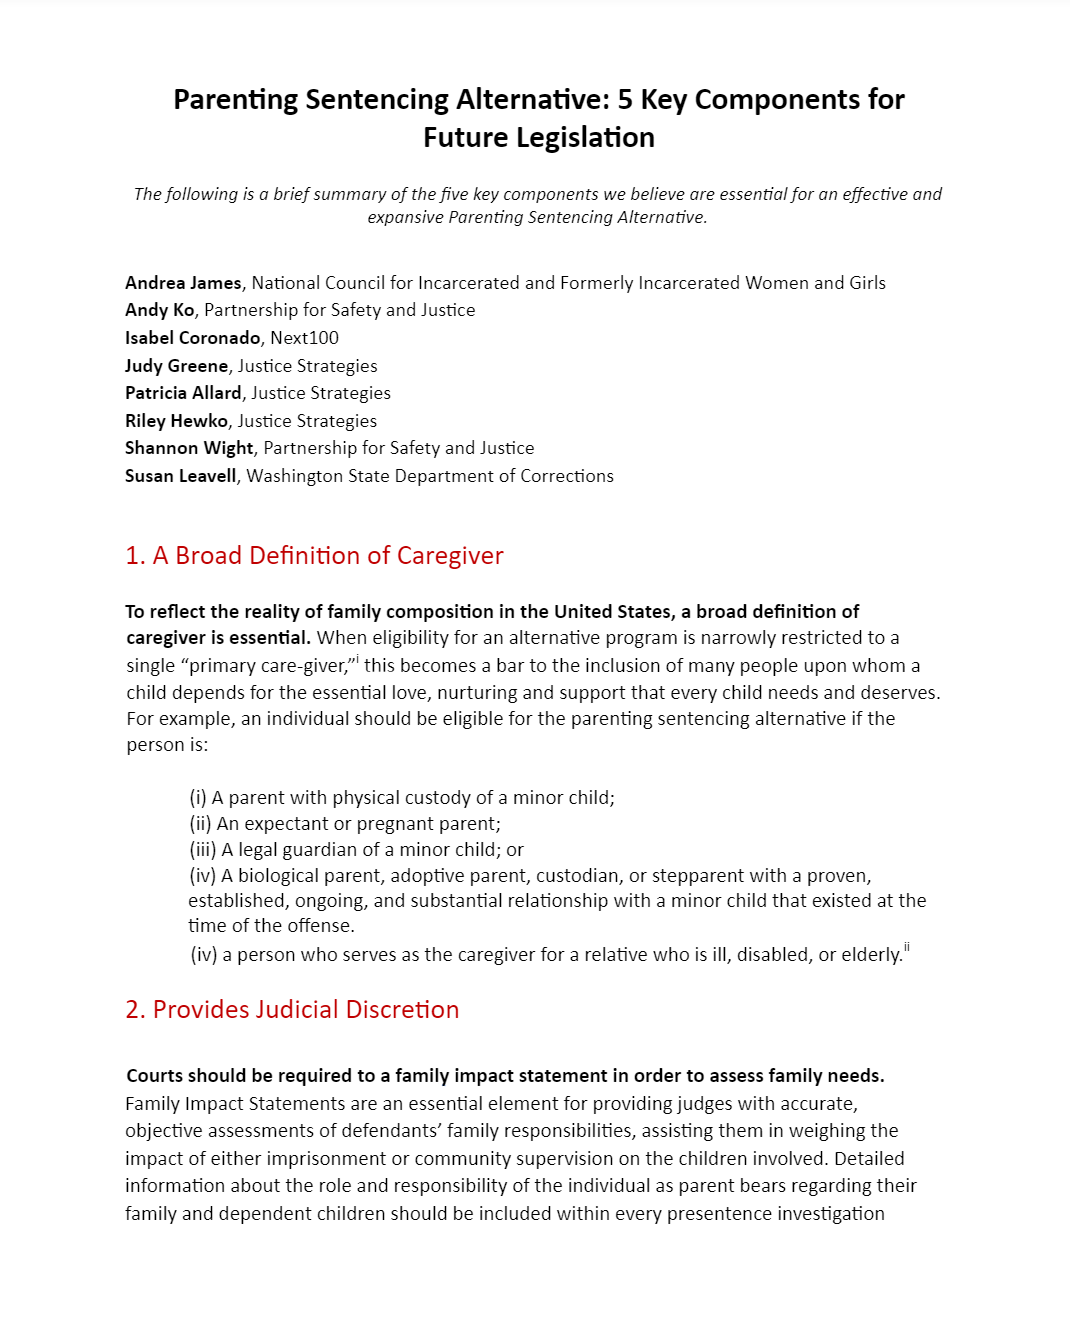 5 key components to future legislation in parent sentencing alternative PDF file